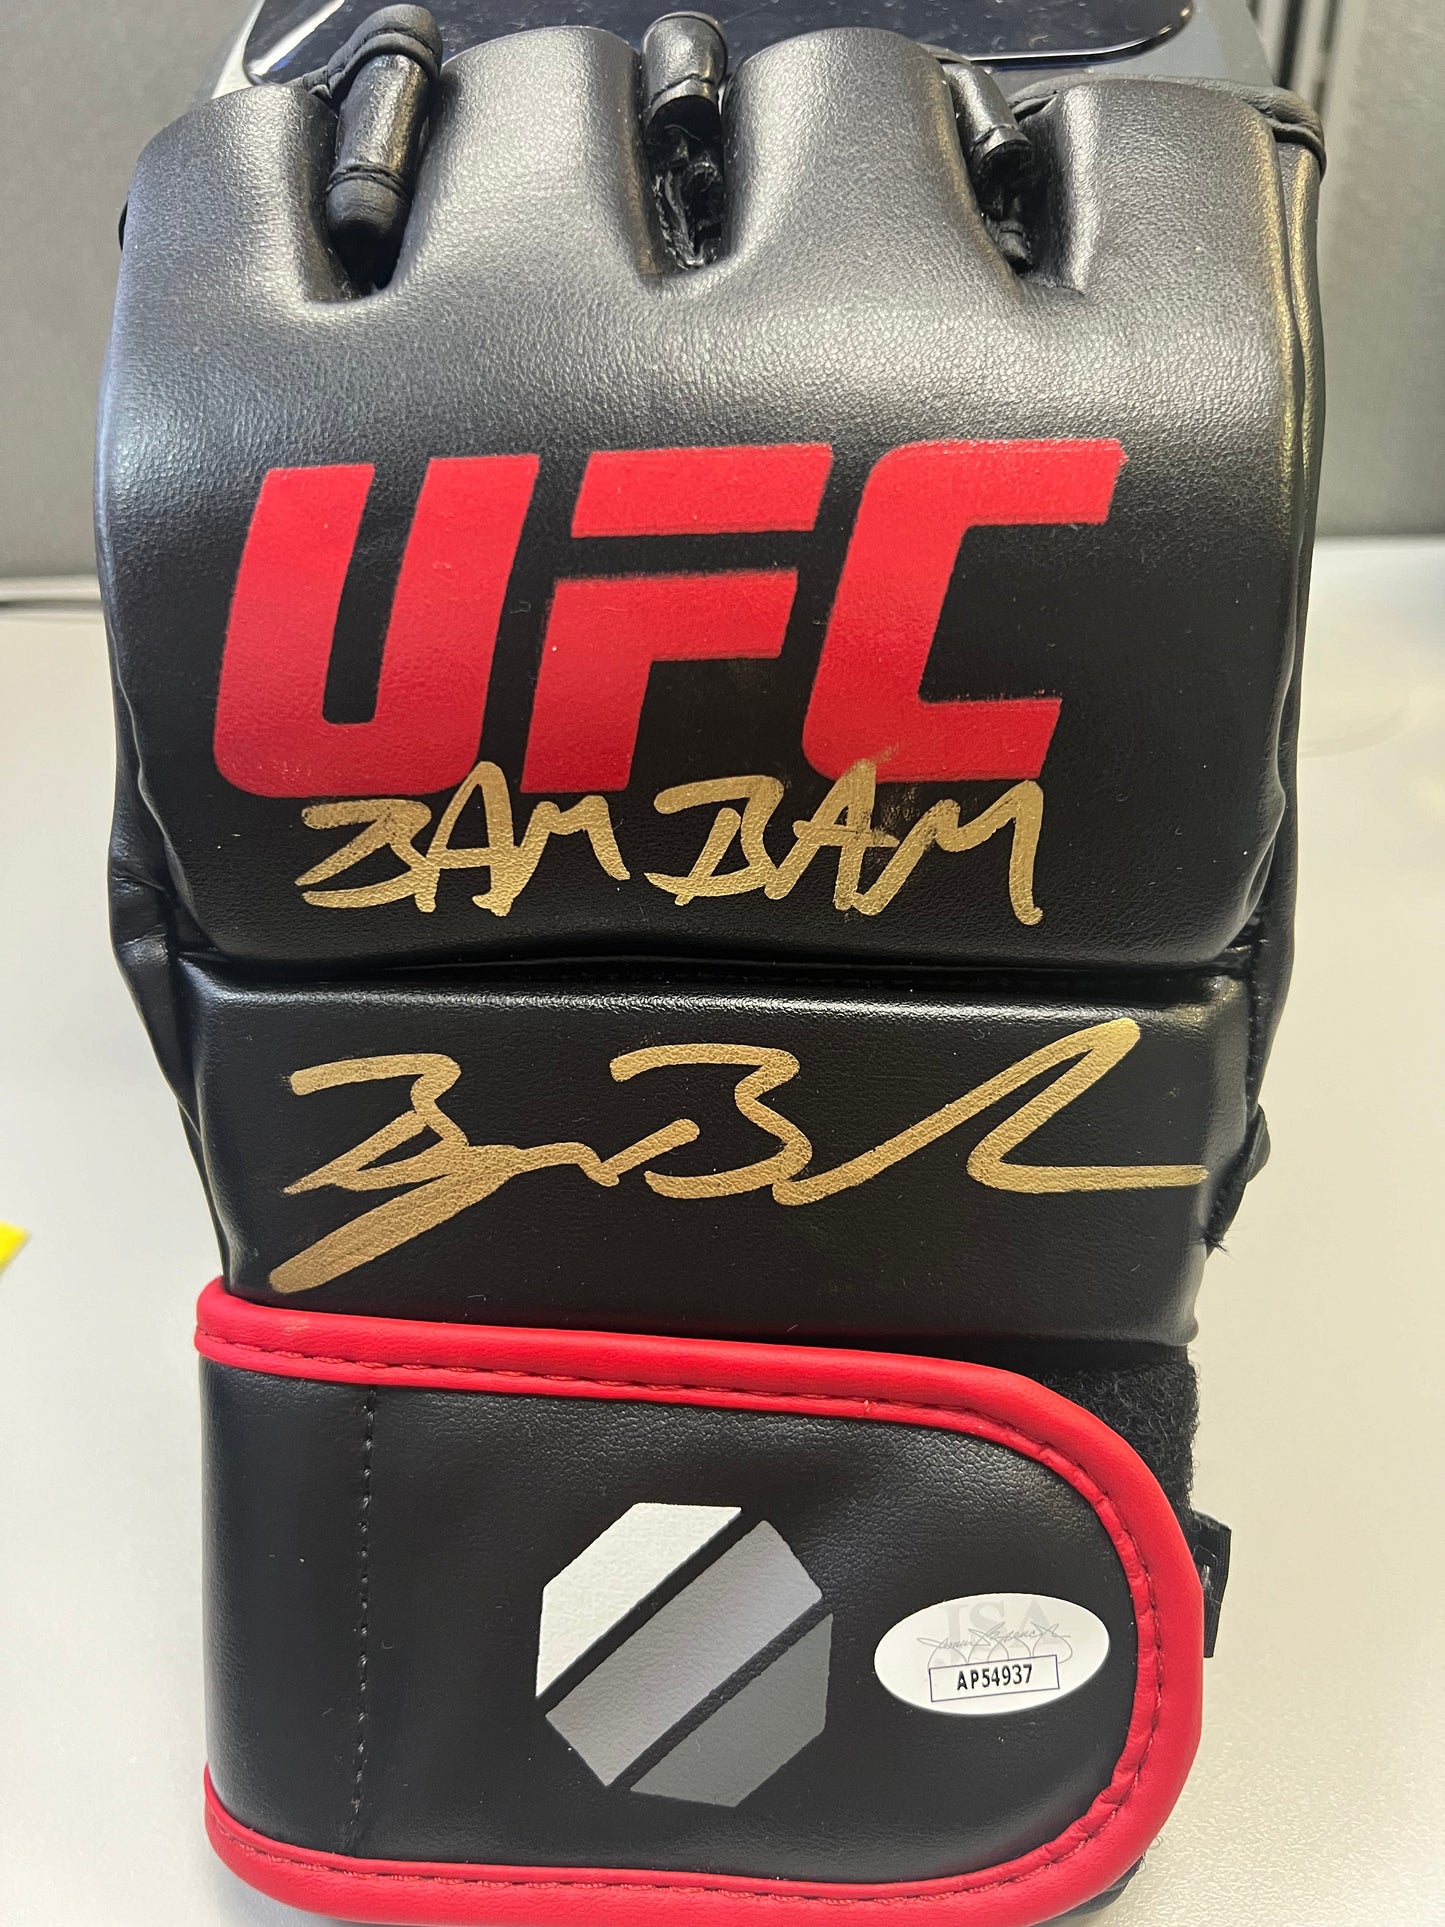 Bryan Barberena Signed/Inscribed UFC Glove with JSA COA